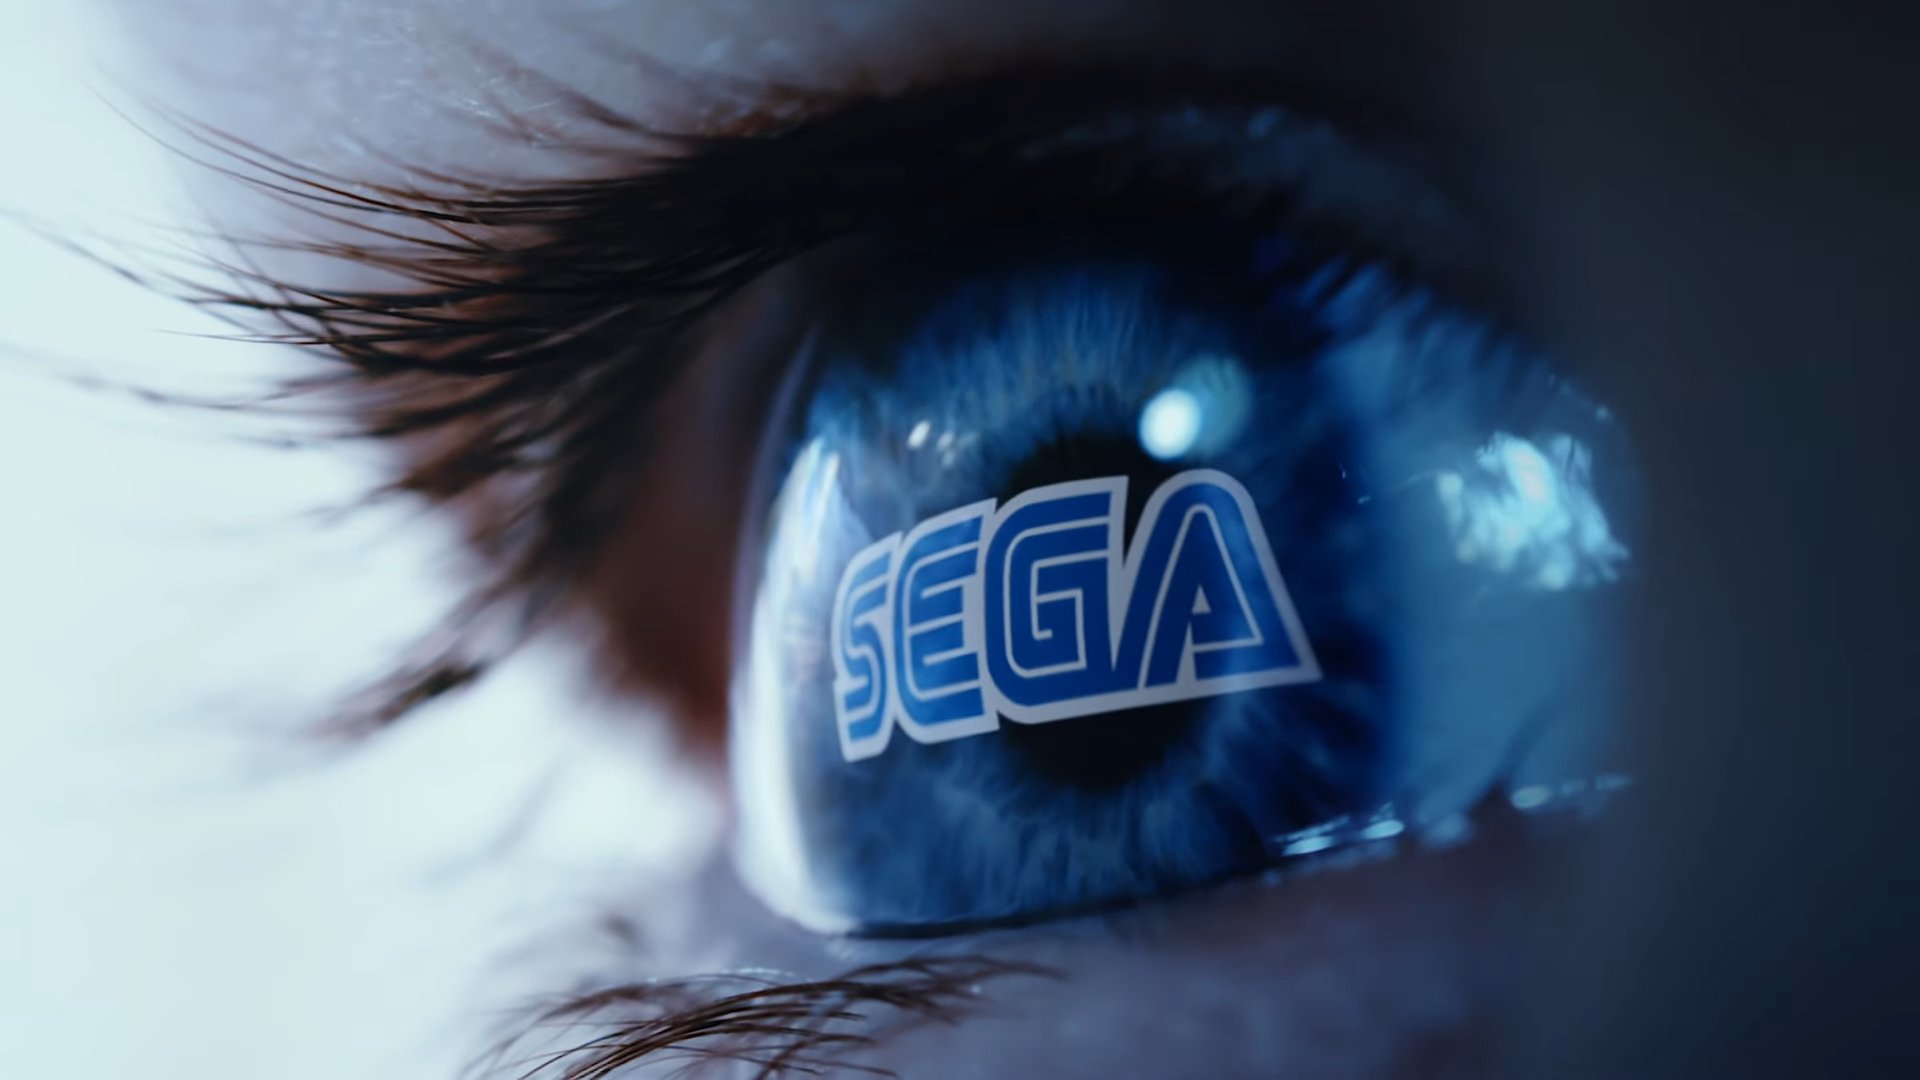 SEGA confirma reboot de cinco jogos clássicos para breve